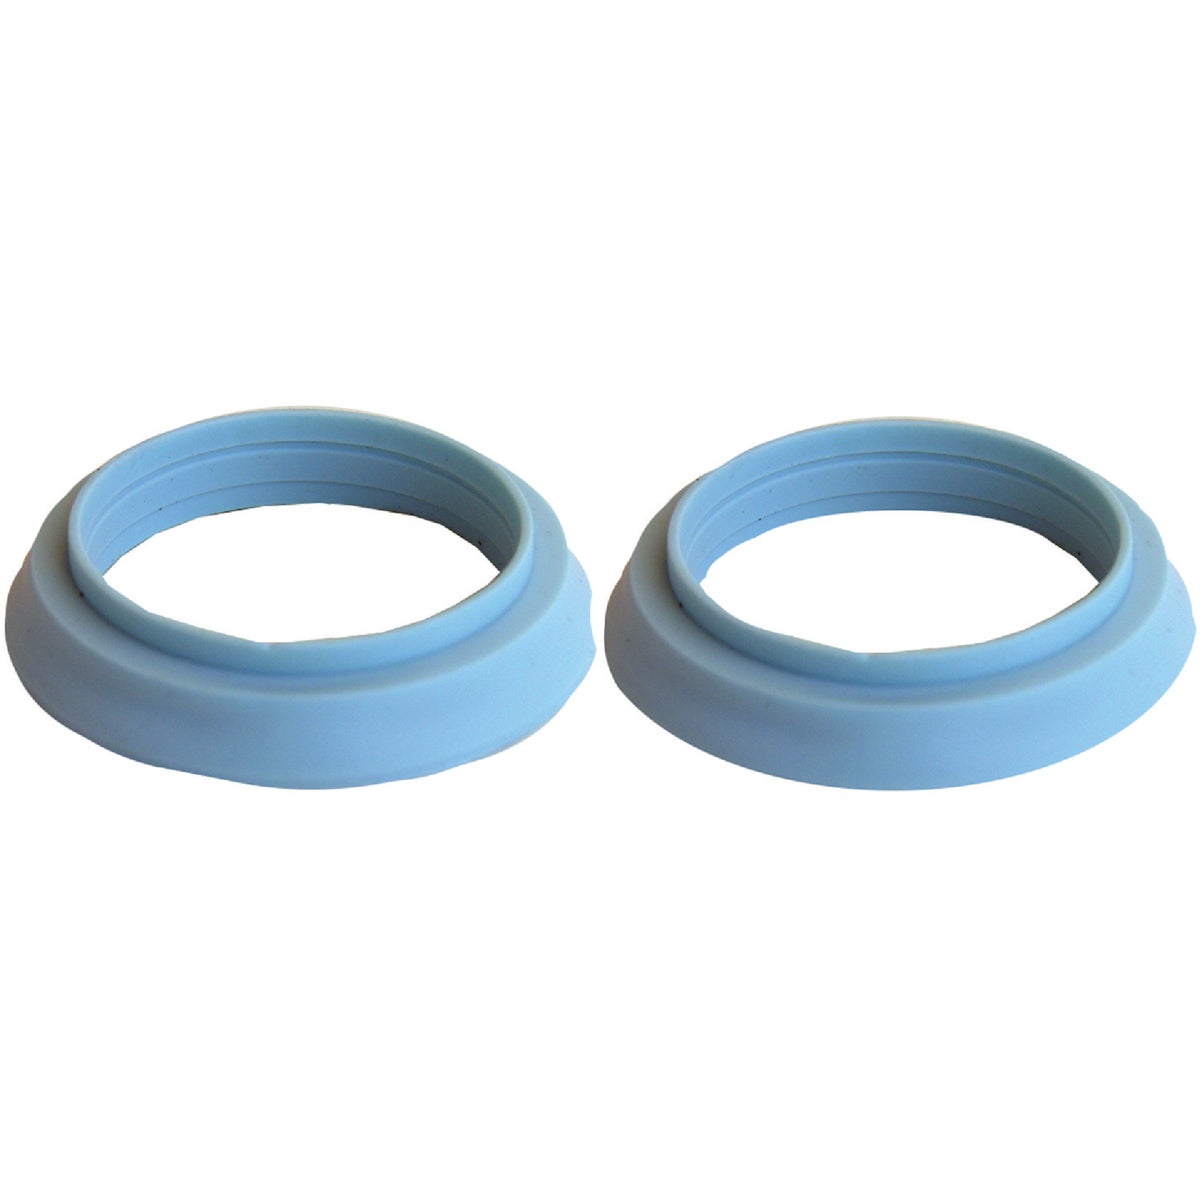 Lasco 1-1/2 In. x 1-1/4 In. Blue Vinyl Slip Joint Washer (2-Pack)